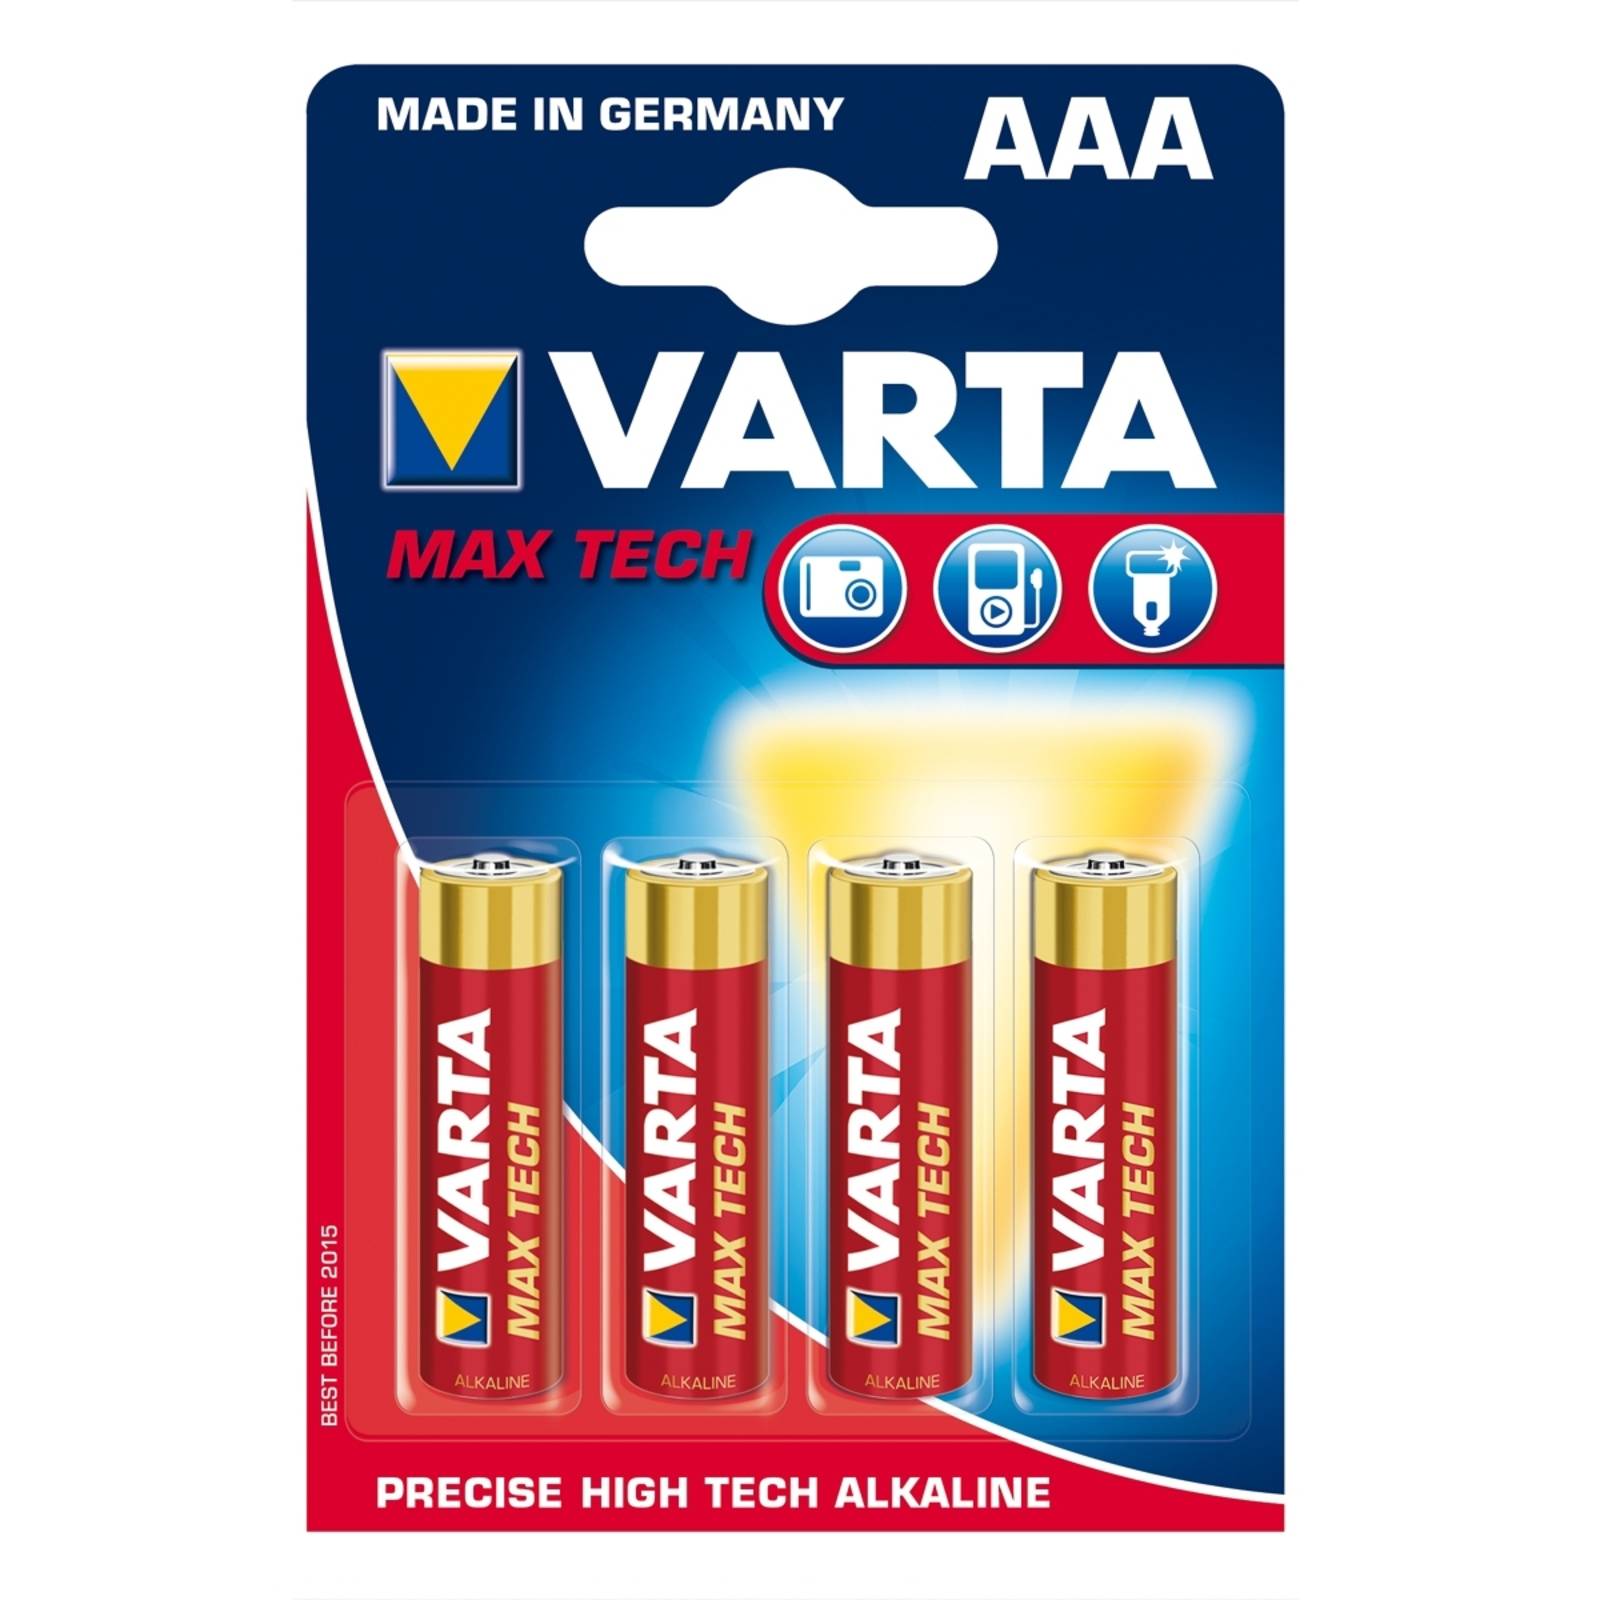 Varta Max Tech-batterier AAA Micro 4703 i 4-pack blister